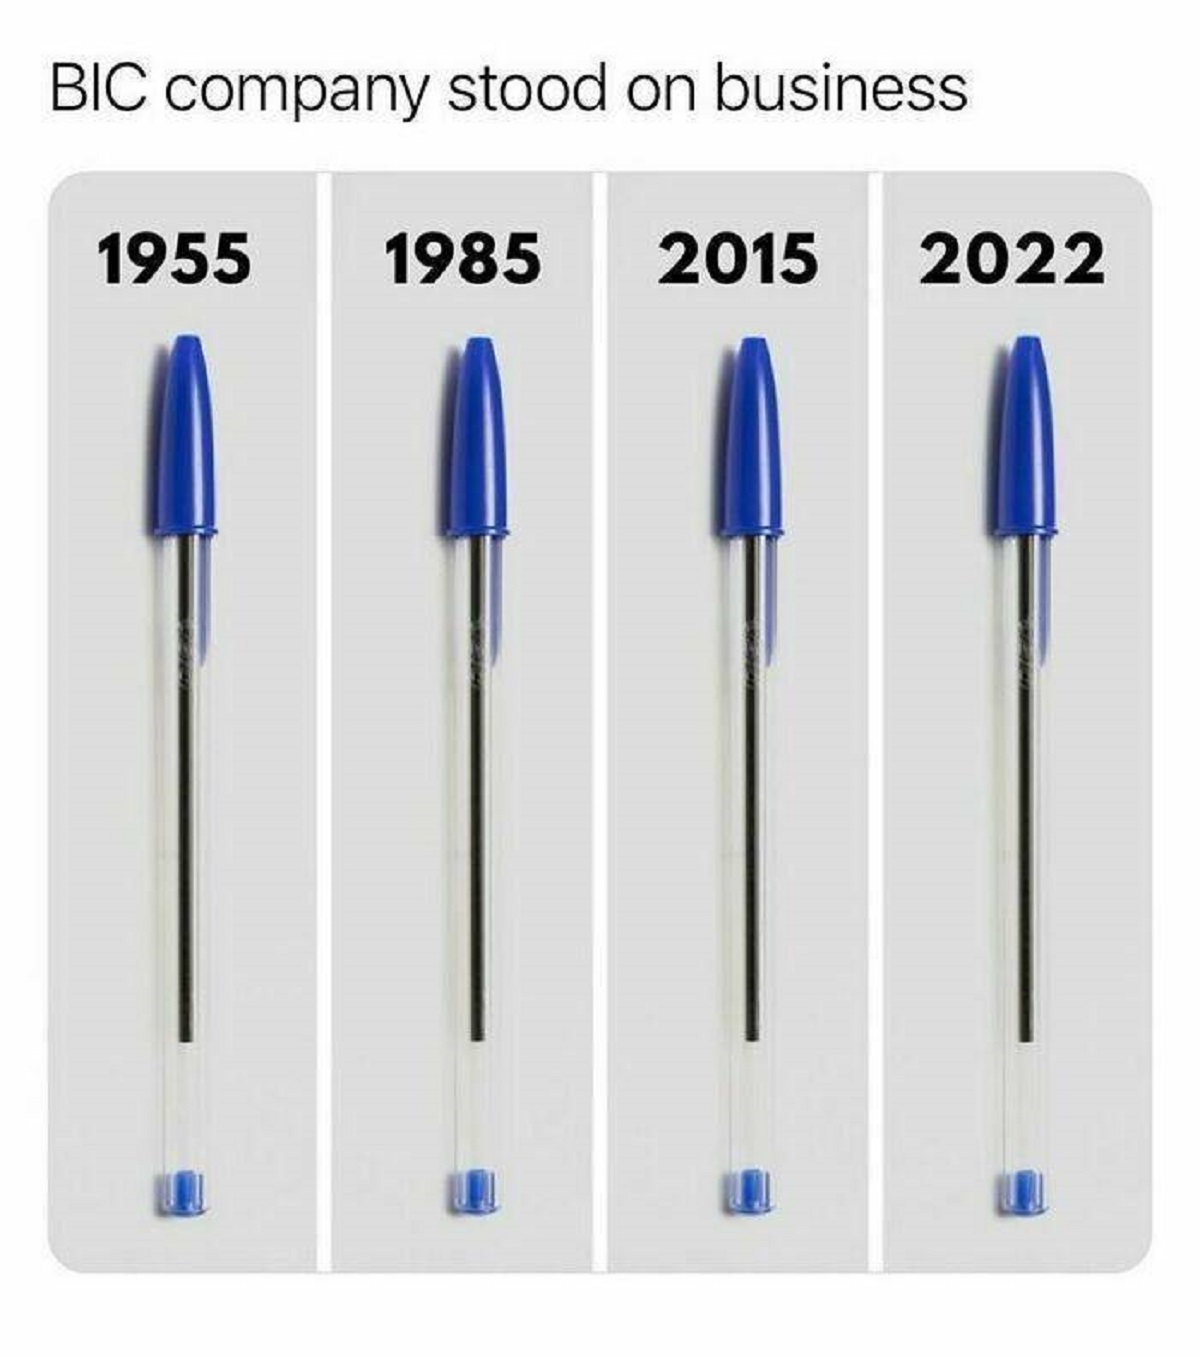 bic stood on business - Bic company stood on business 1955 1985 2015 2022